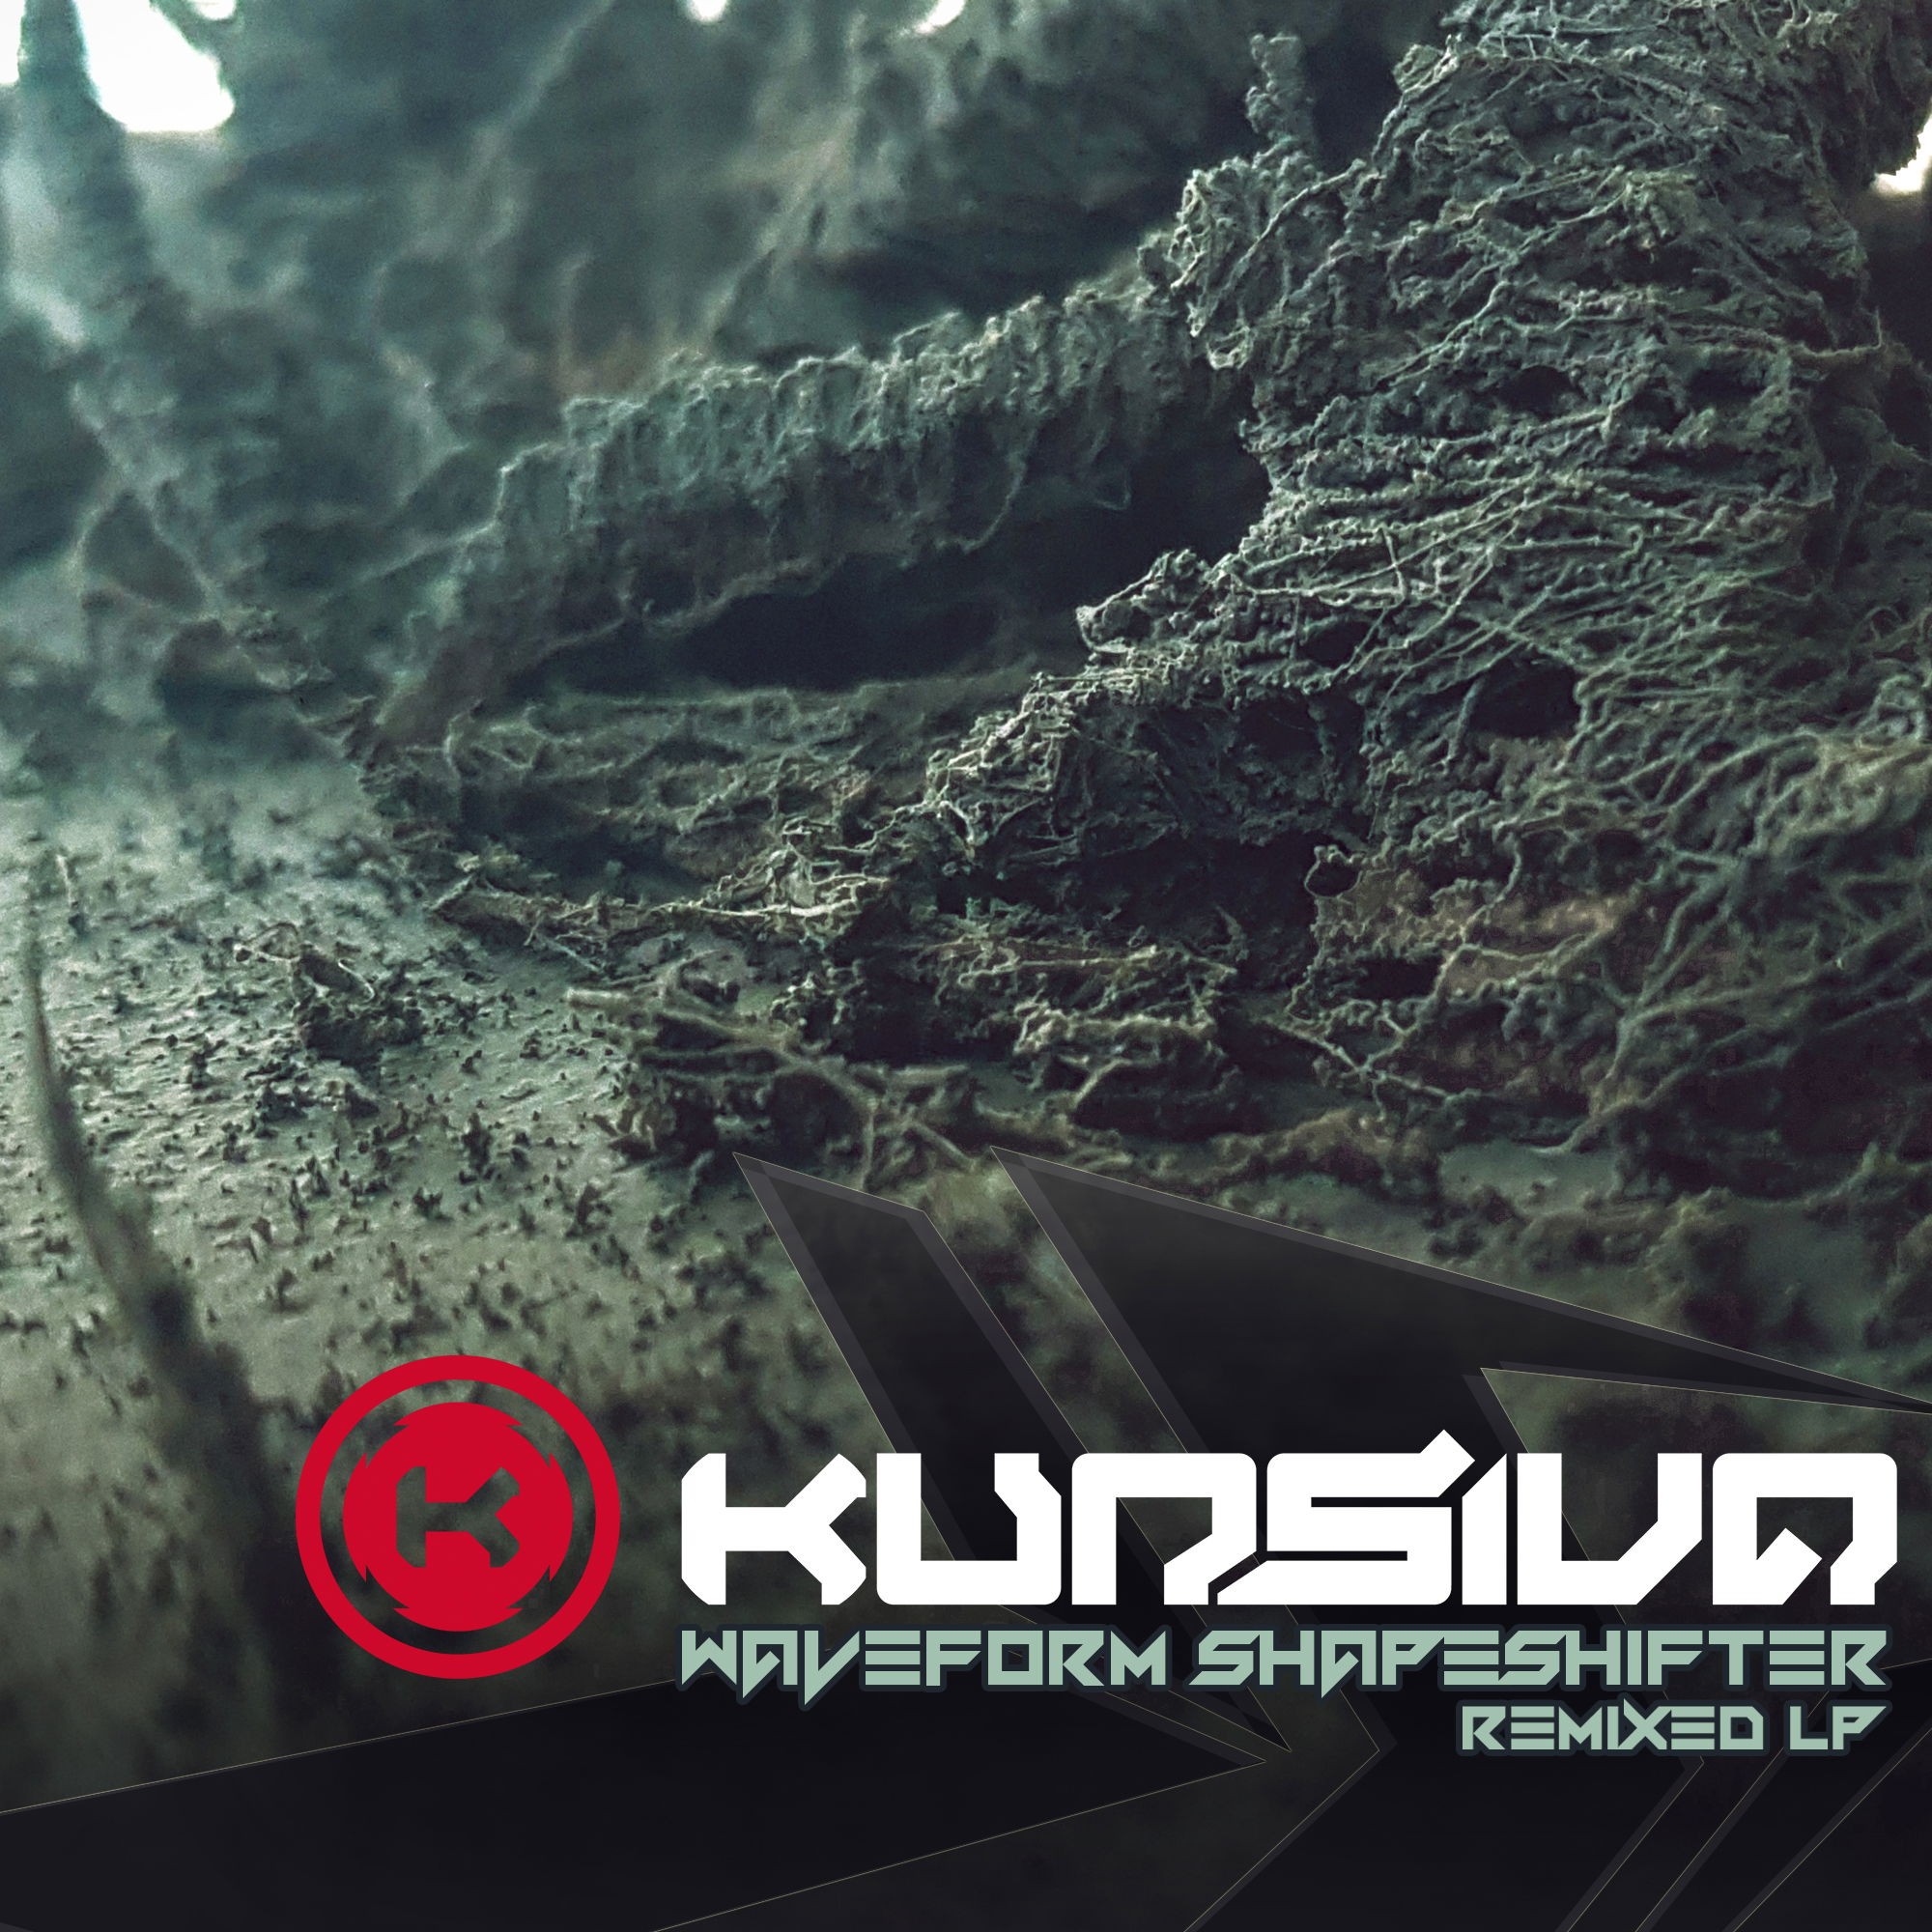 Waveform Shapeshifter Remixed LP by: Kursiva